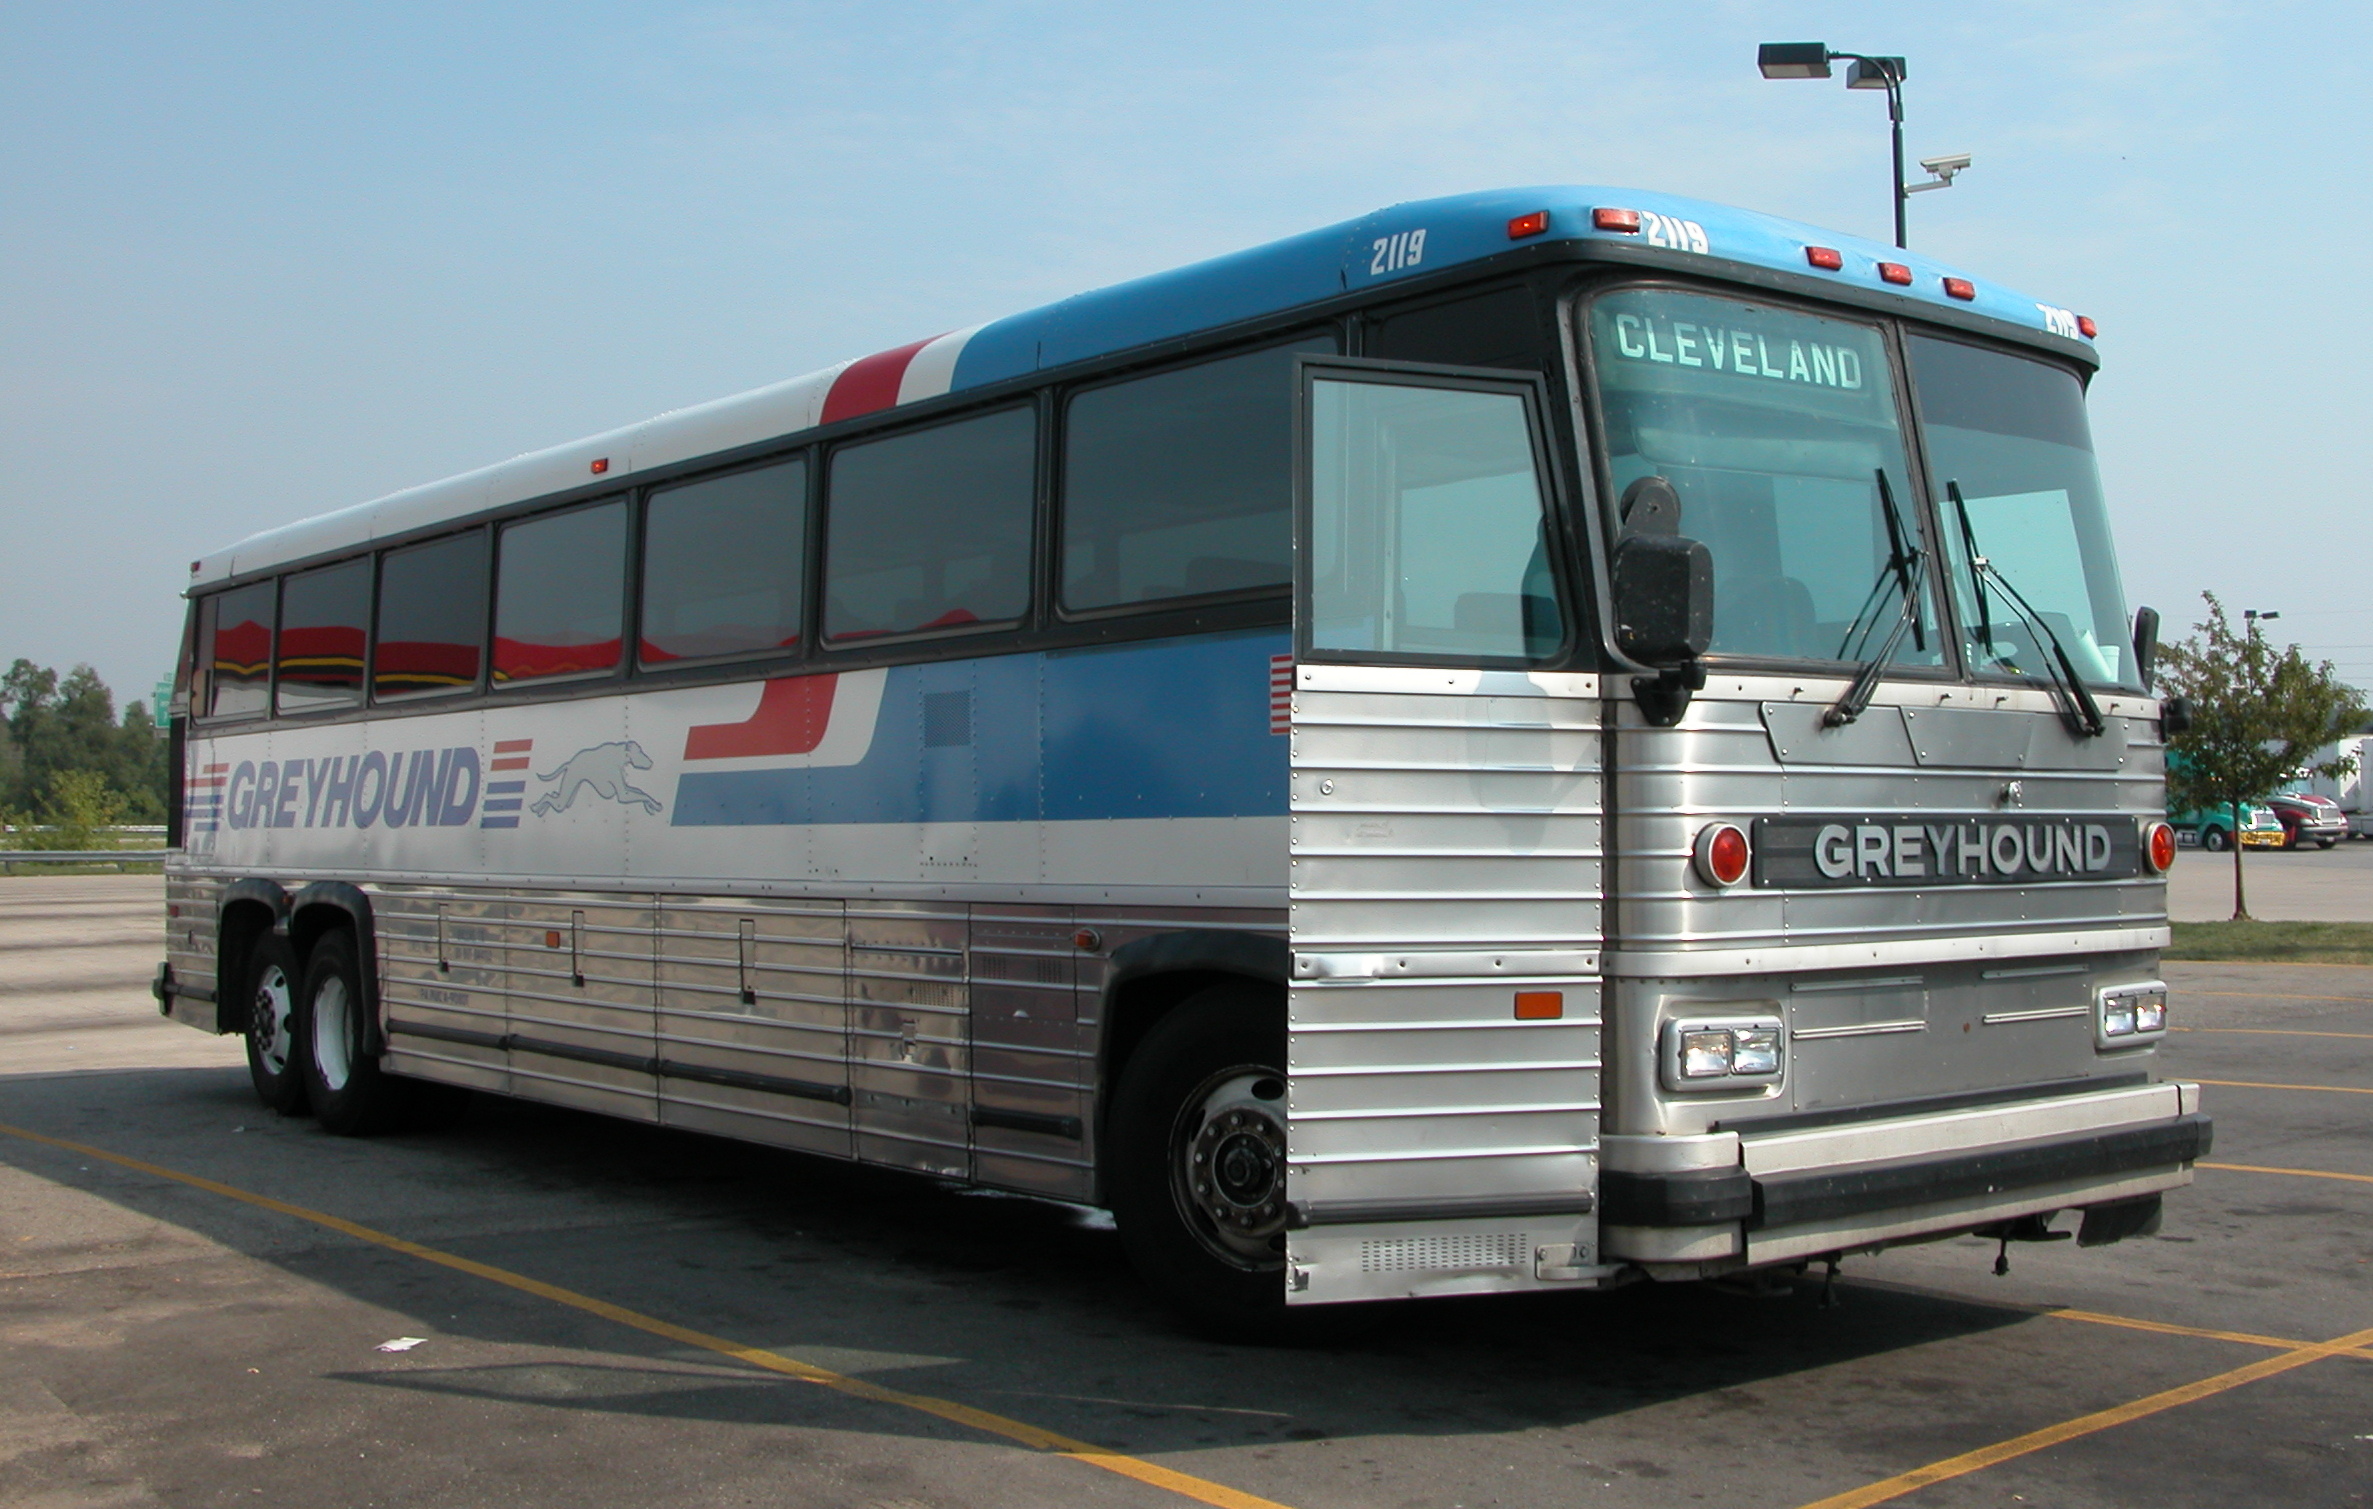 File:2003-08-25 Greyhound bus.jpg - Wikimedia Commons